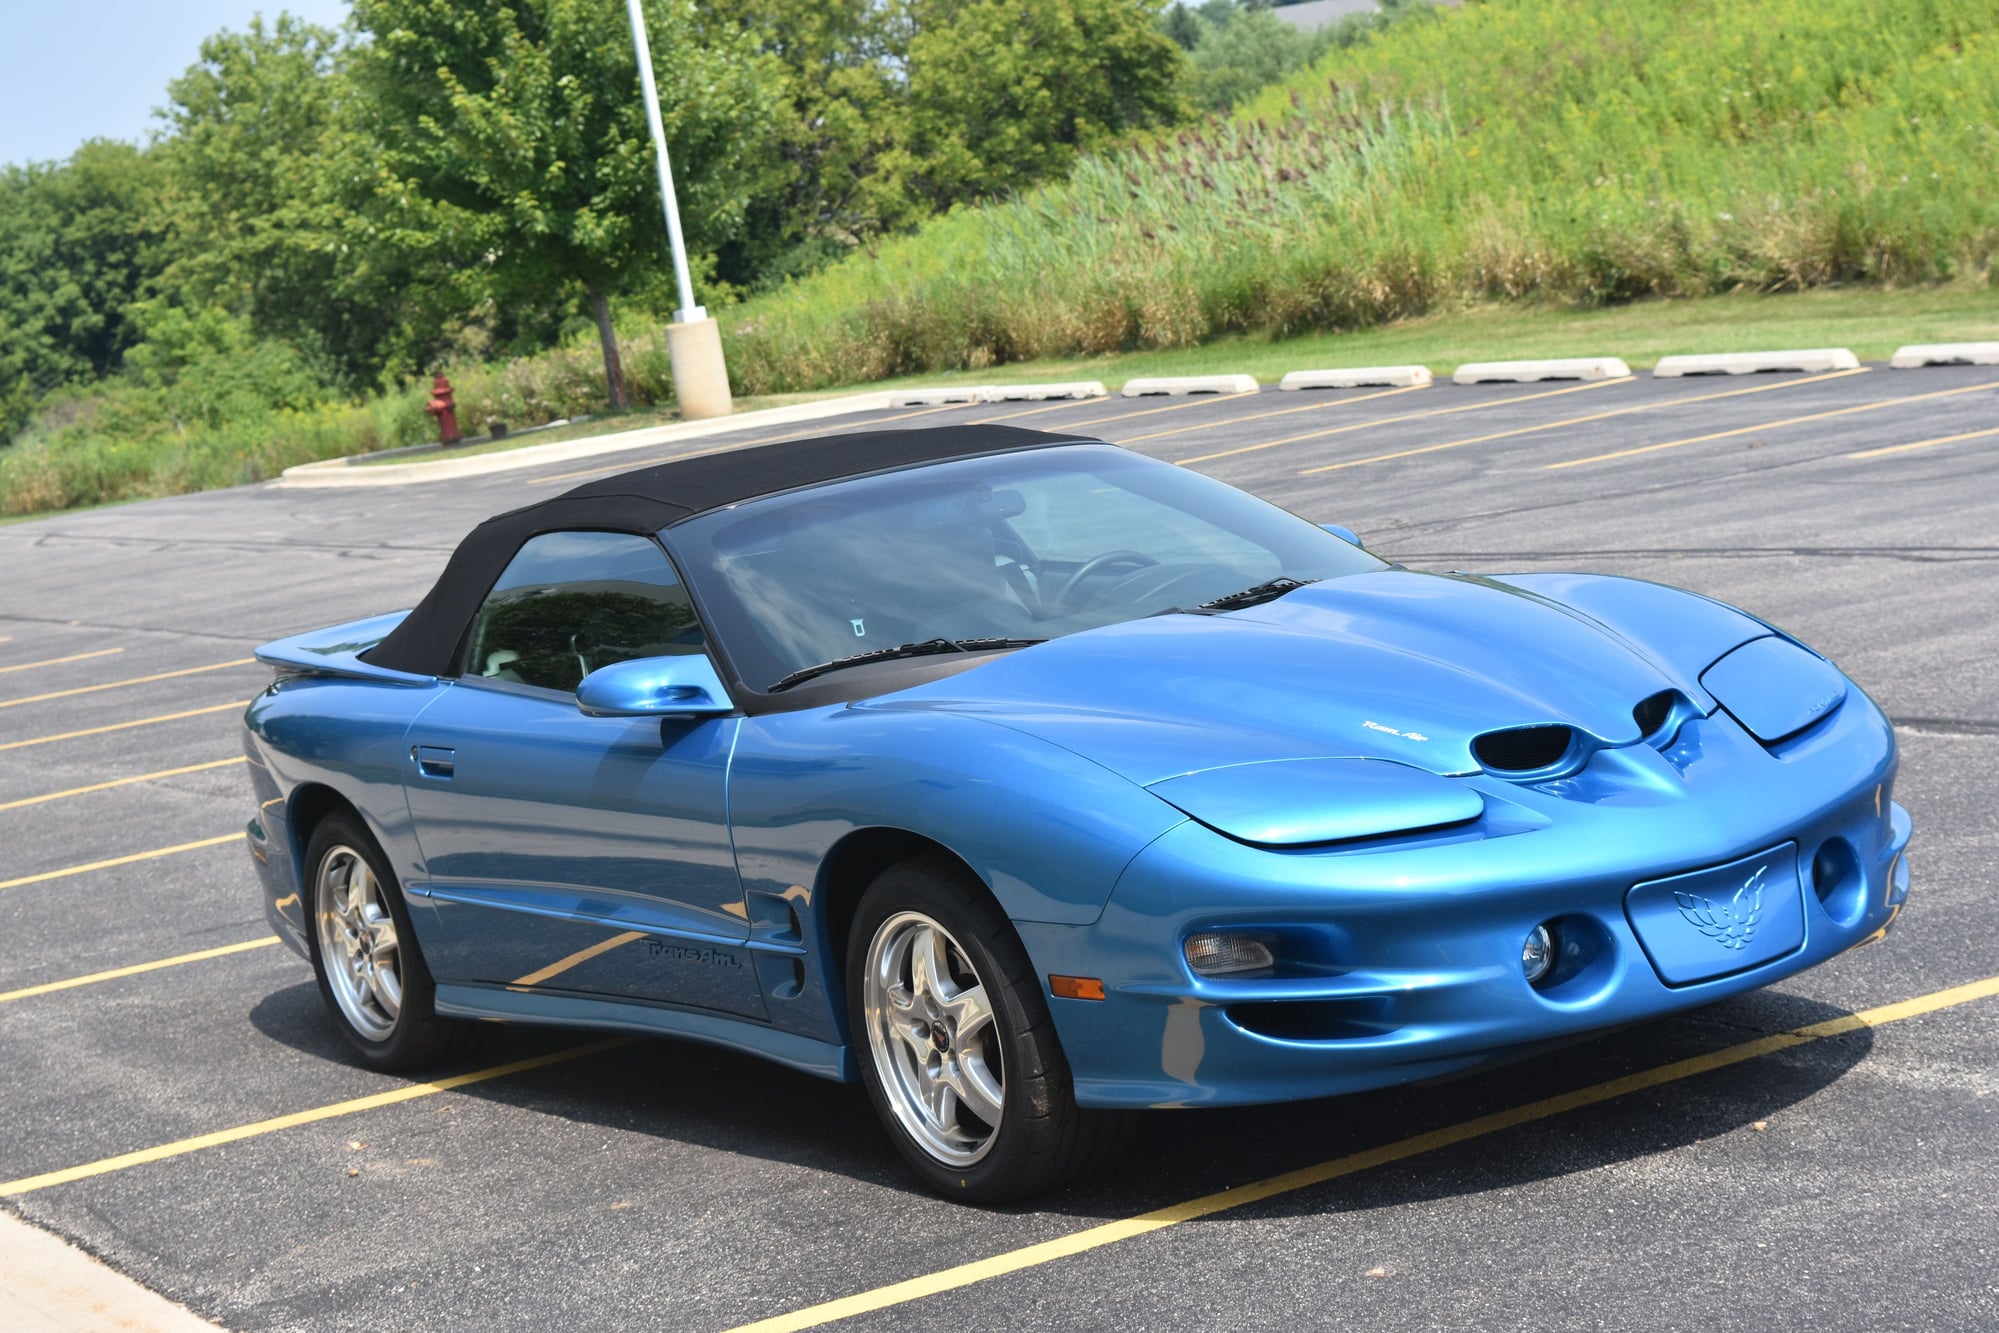 1999 Pontiac Firebird - 1999 Trans AM Convertible - Medium Blue Metallic 1 of 24 - Used - VIN 2G2FV32G0X2233154 - 91,000 Miles - 8 cyl - 2WD - Automatic - Convertible - Blue - Lake Zurich, IL 60047, United States